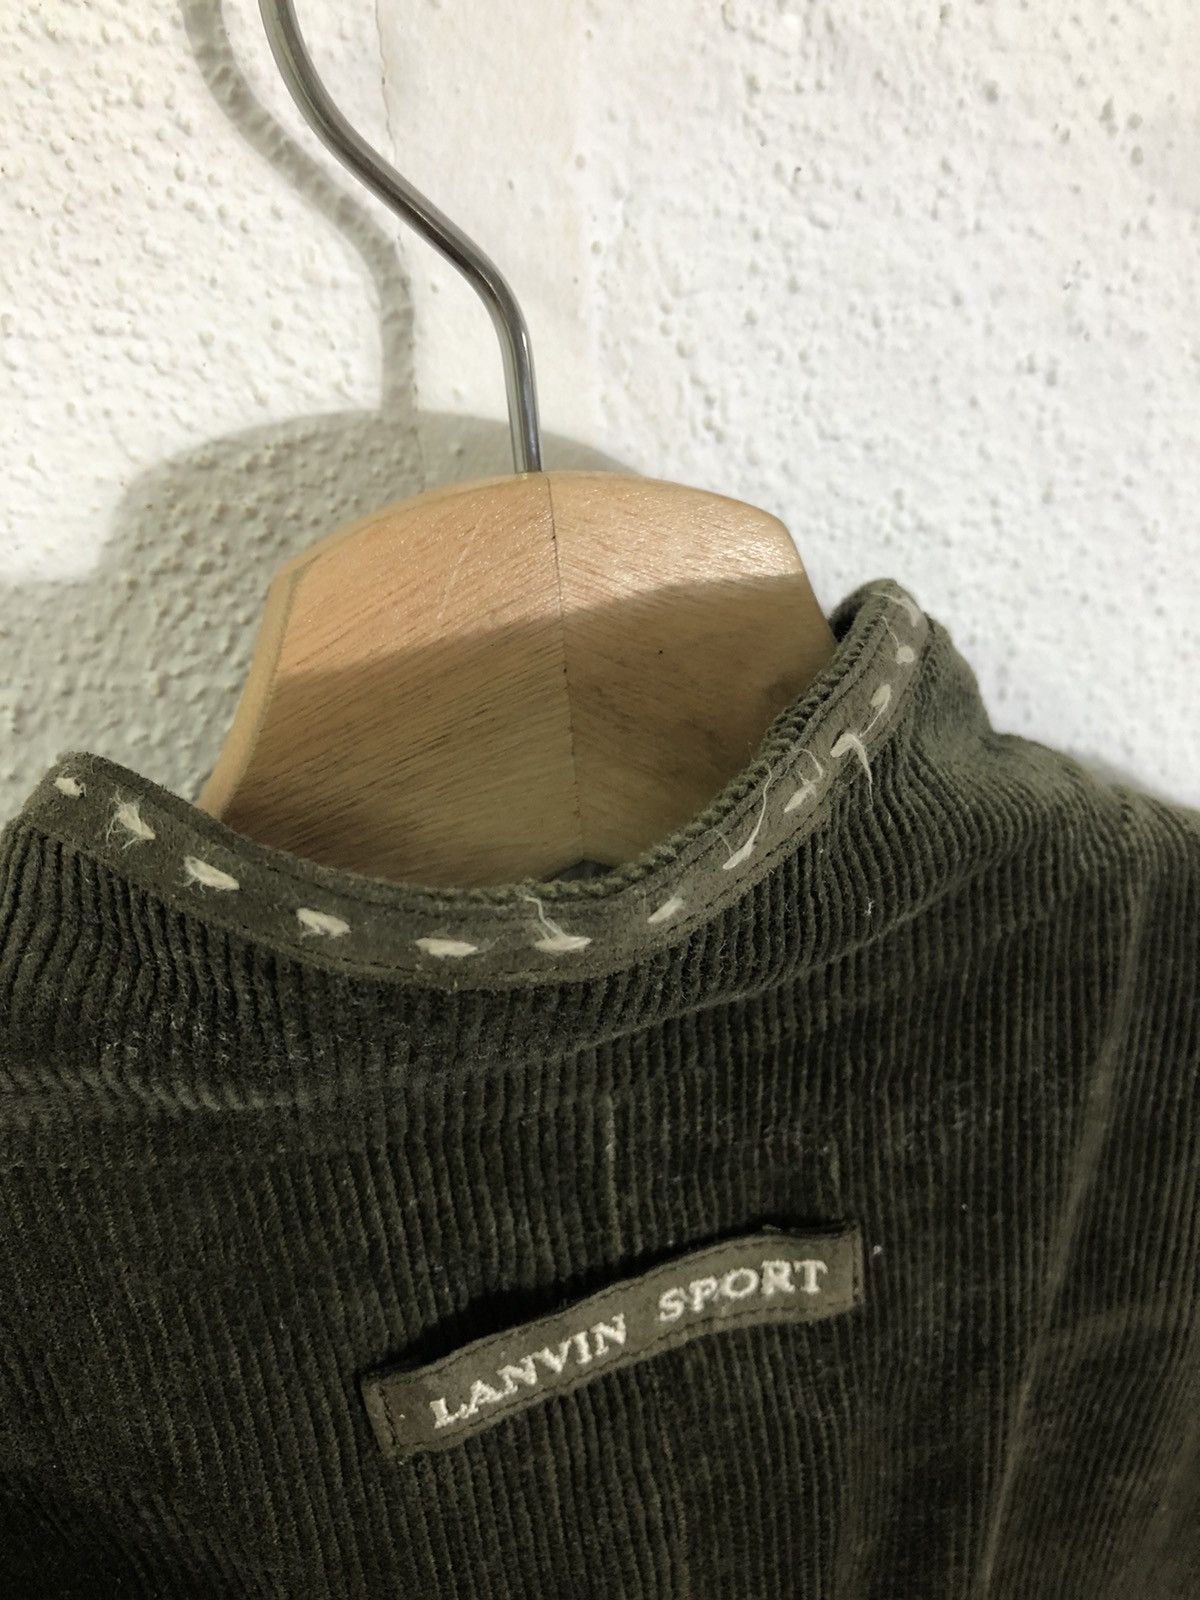 Vintage Lanvin Sport Corduroy Vest Jacket - 8